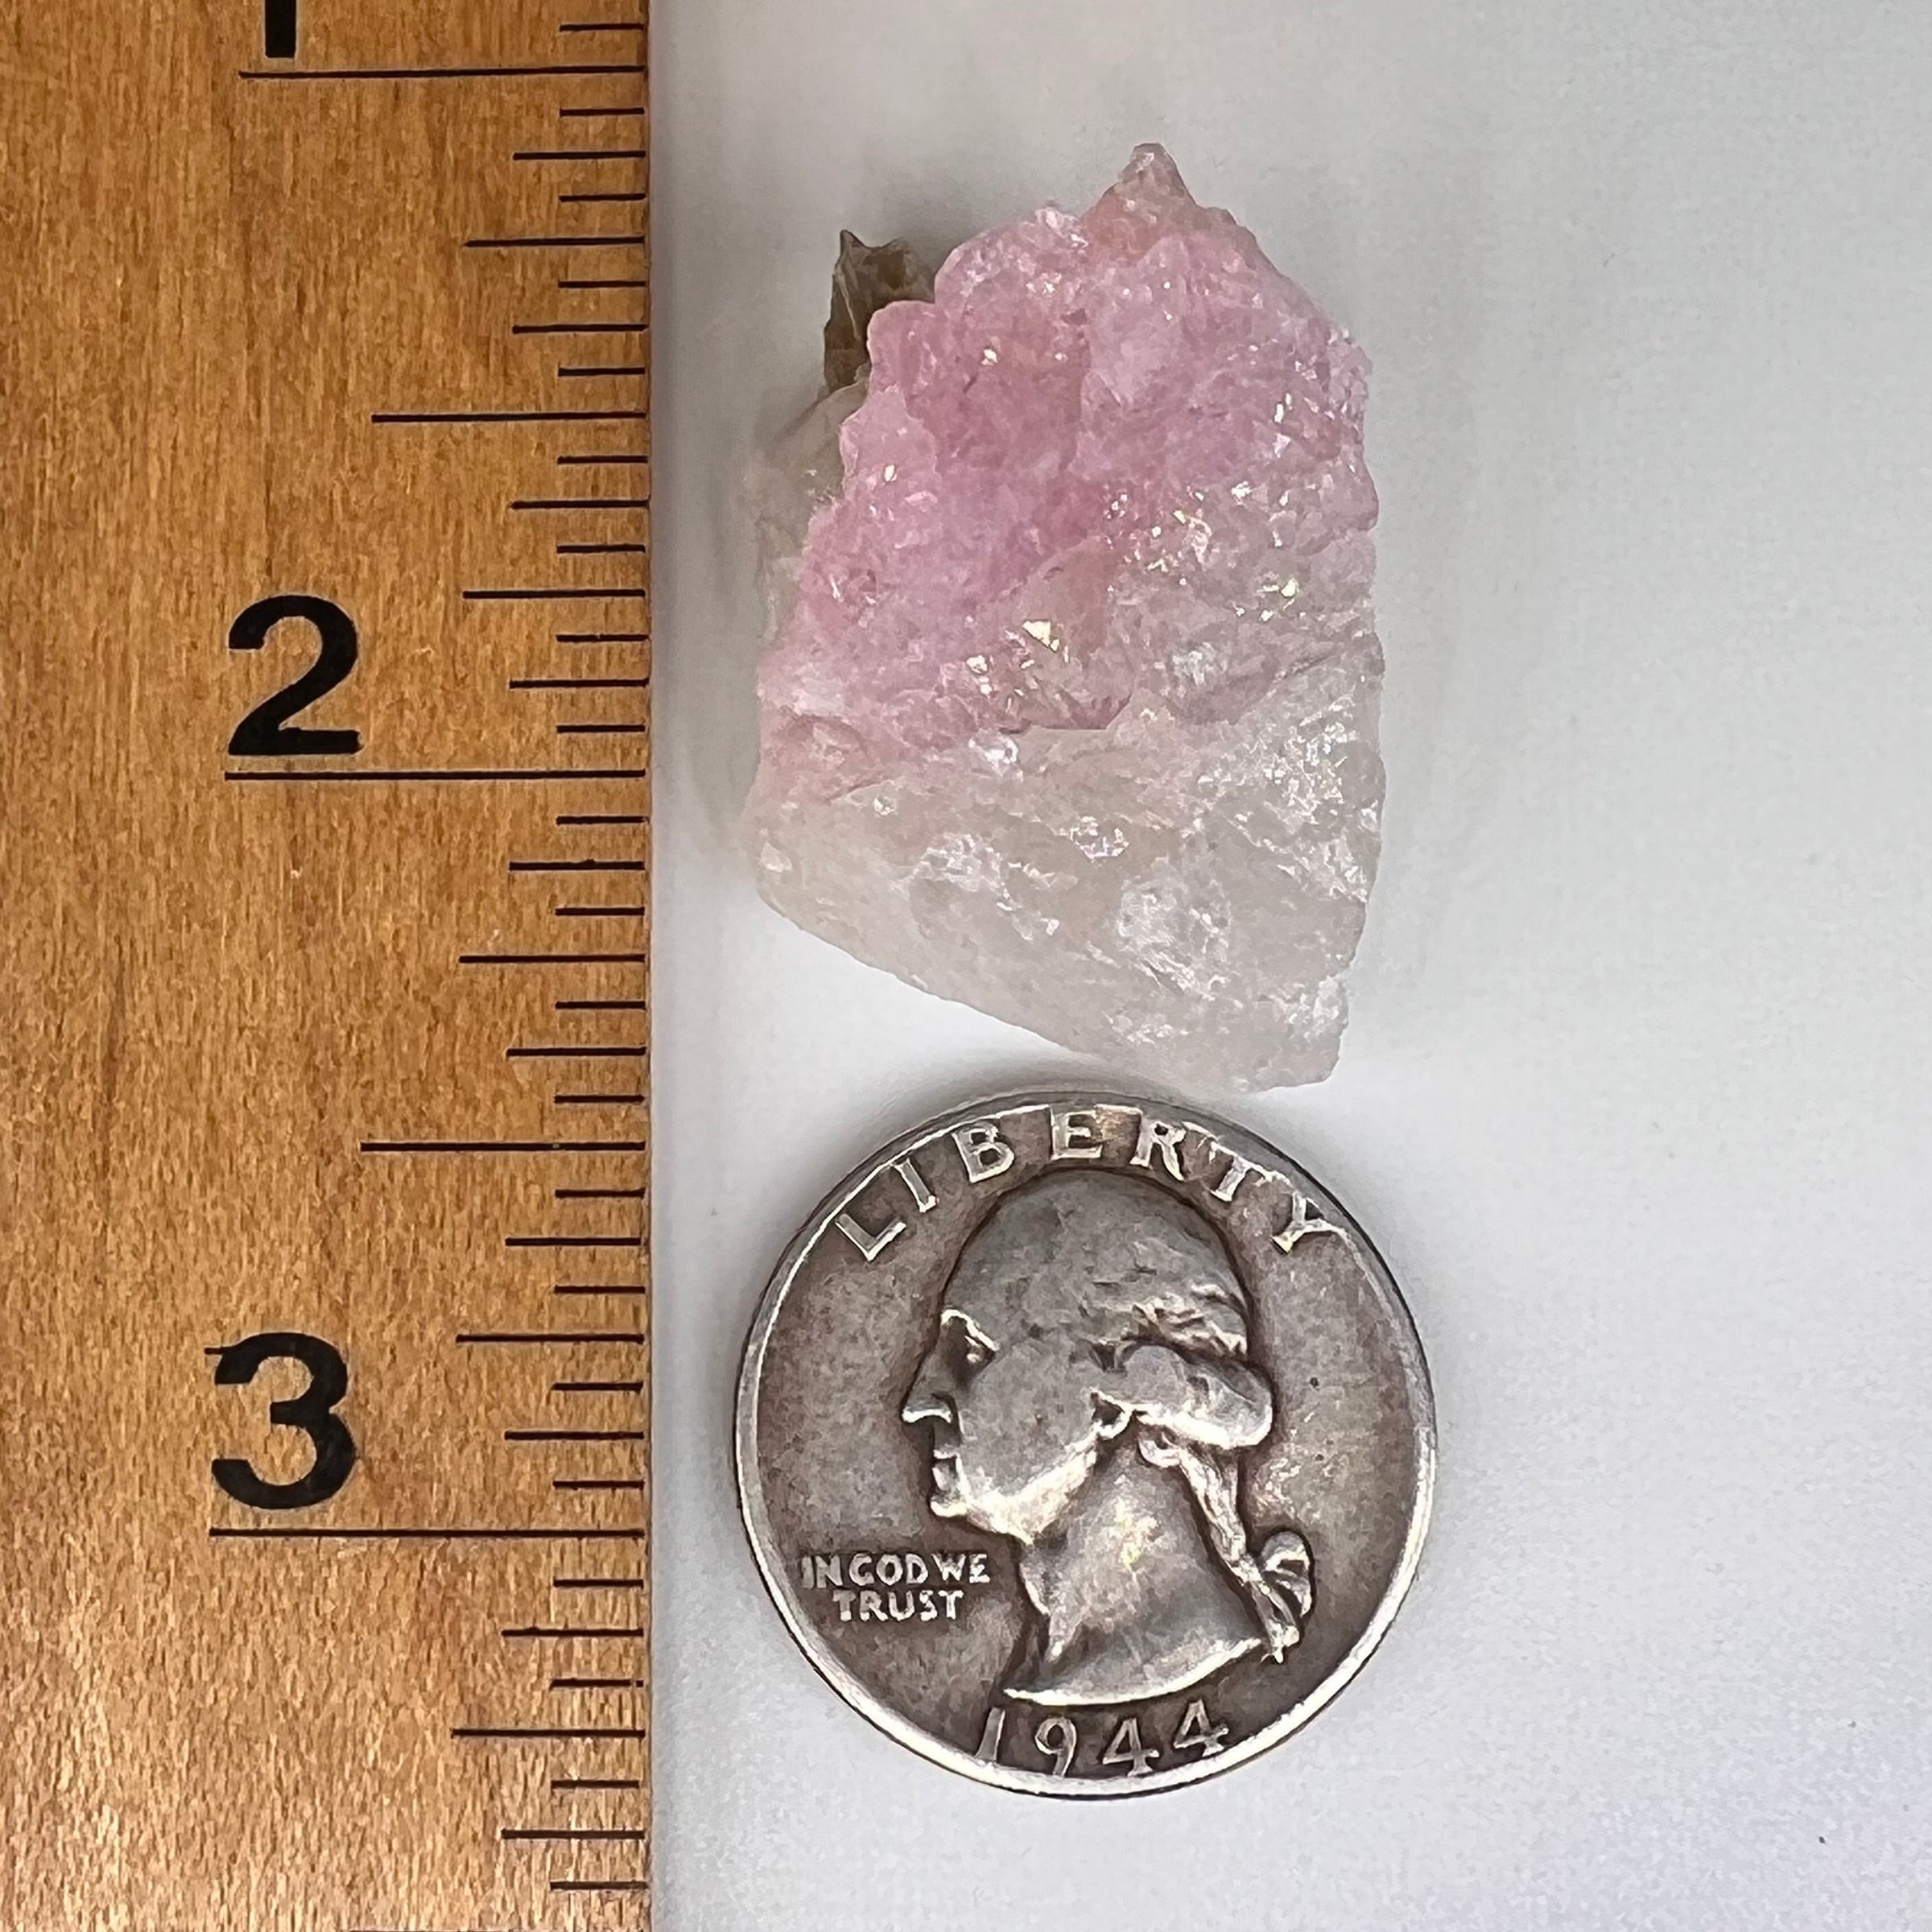 Crystalized Rose Quartz #41-Moldavite Life